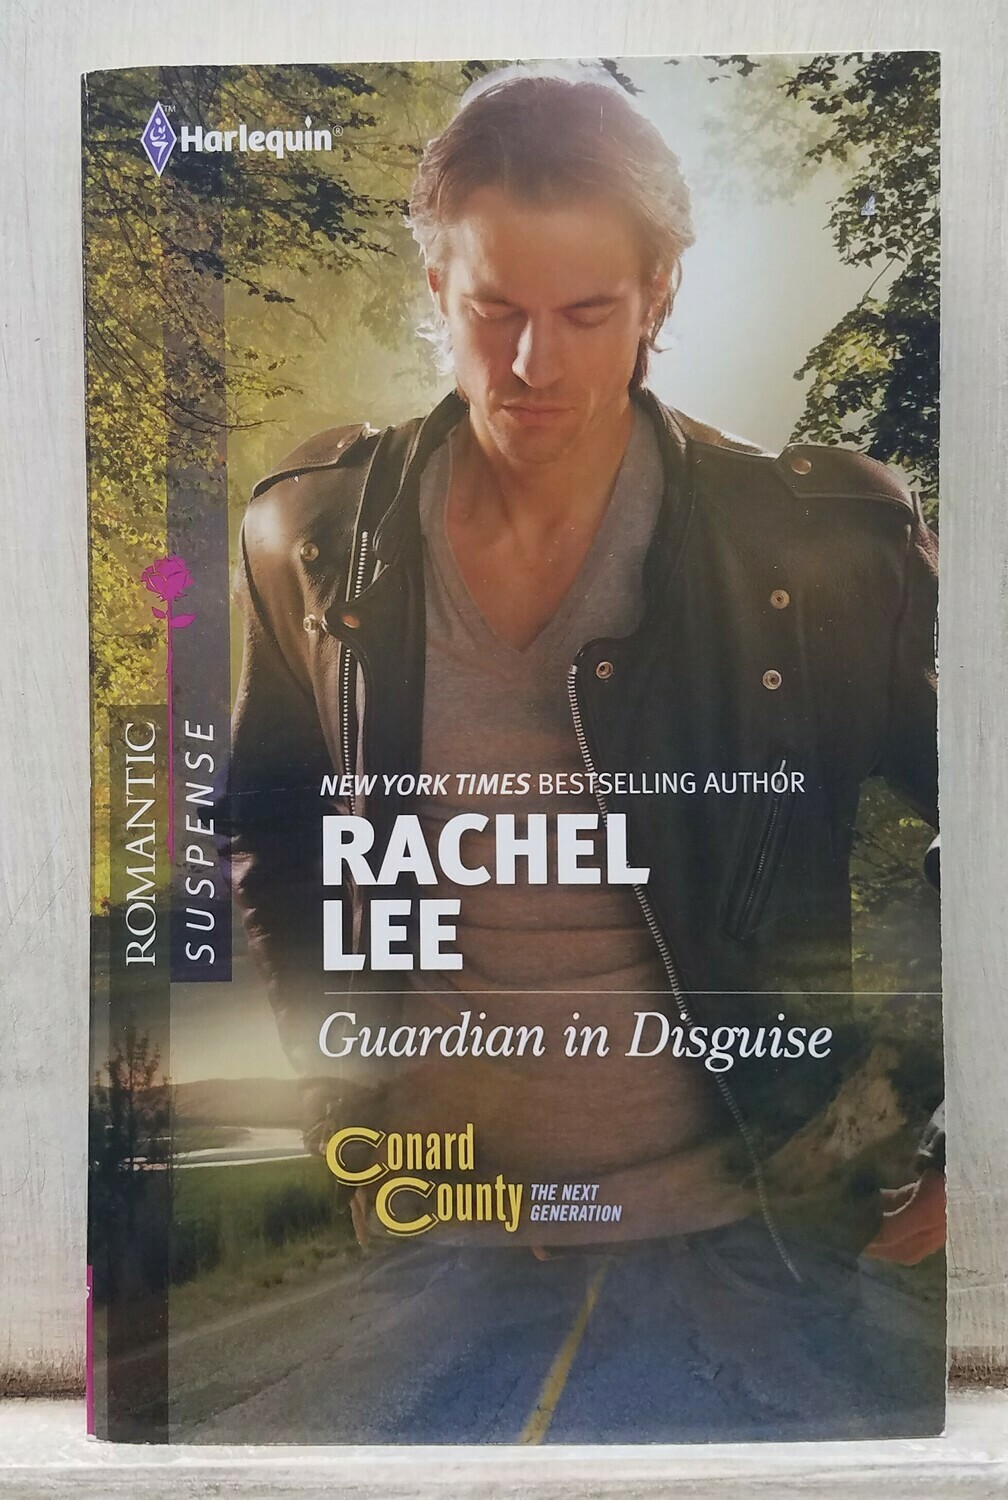 Guardian in Disguise by Rachel Lee